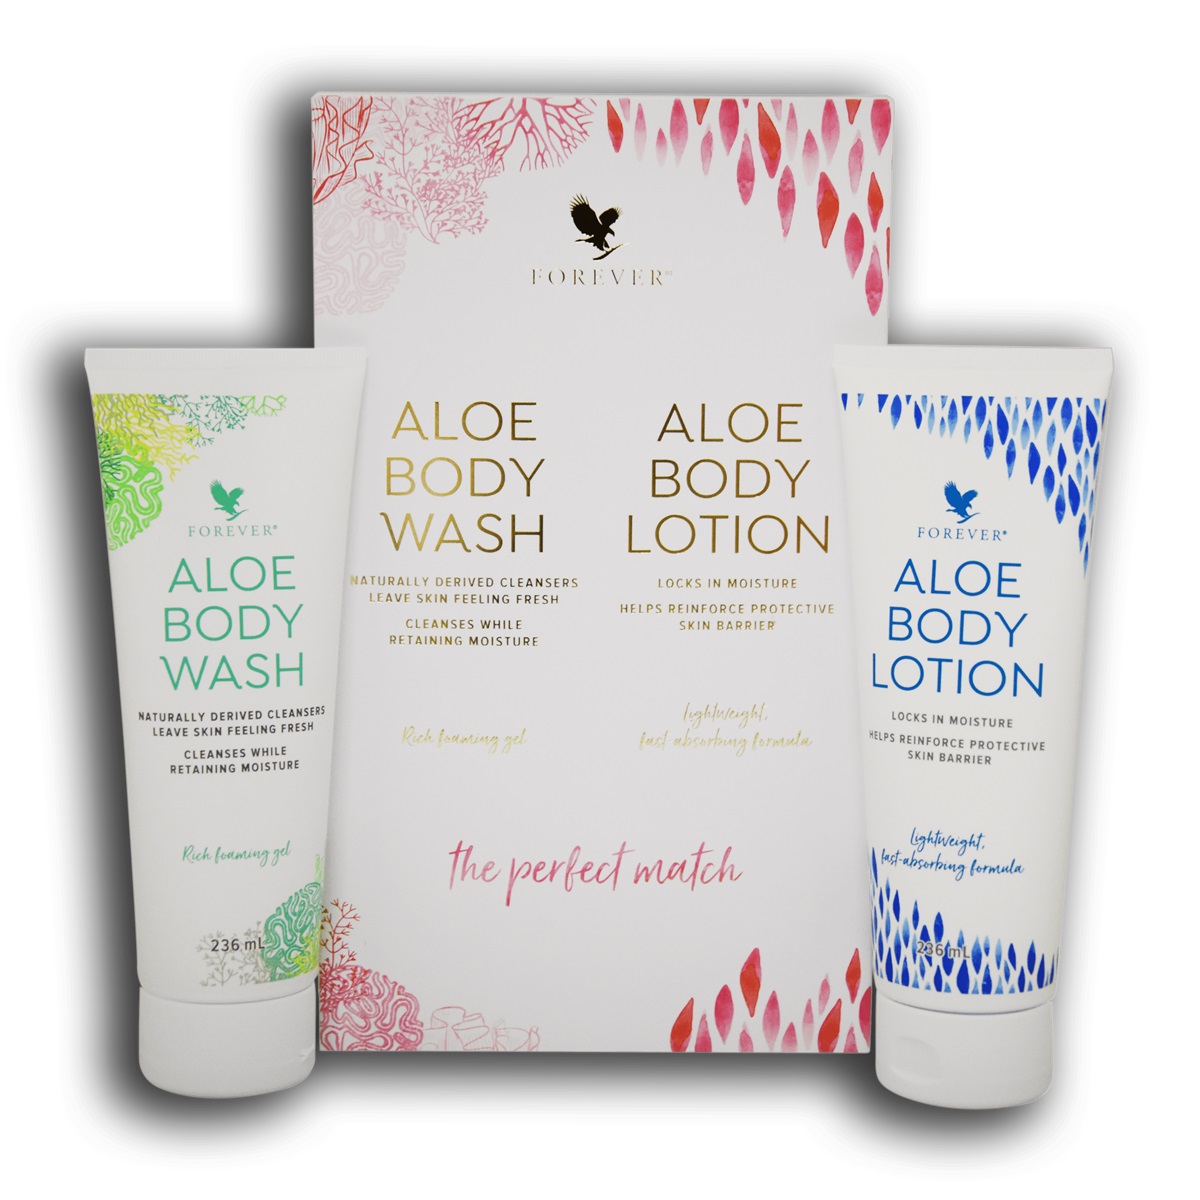 Aloe Body Wash / Lotion combo pack